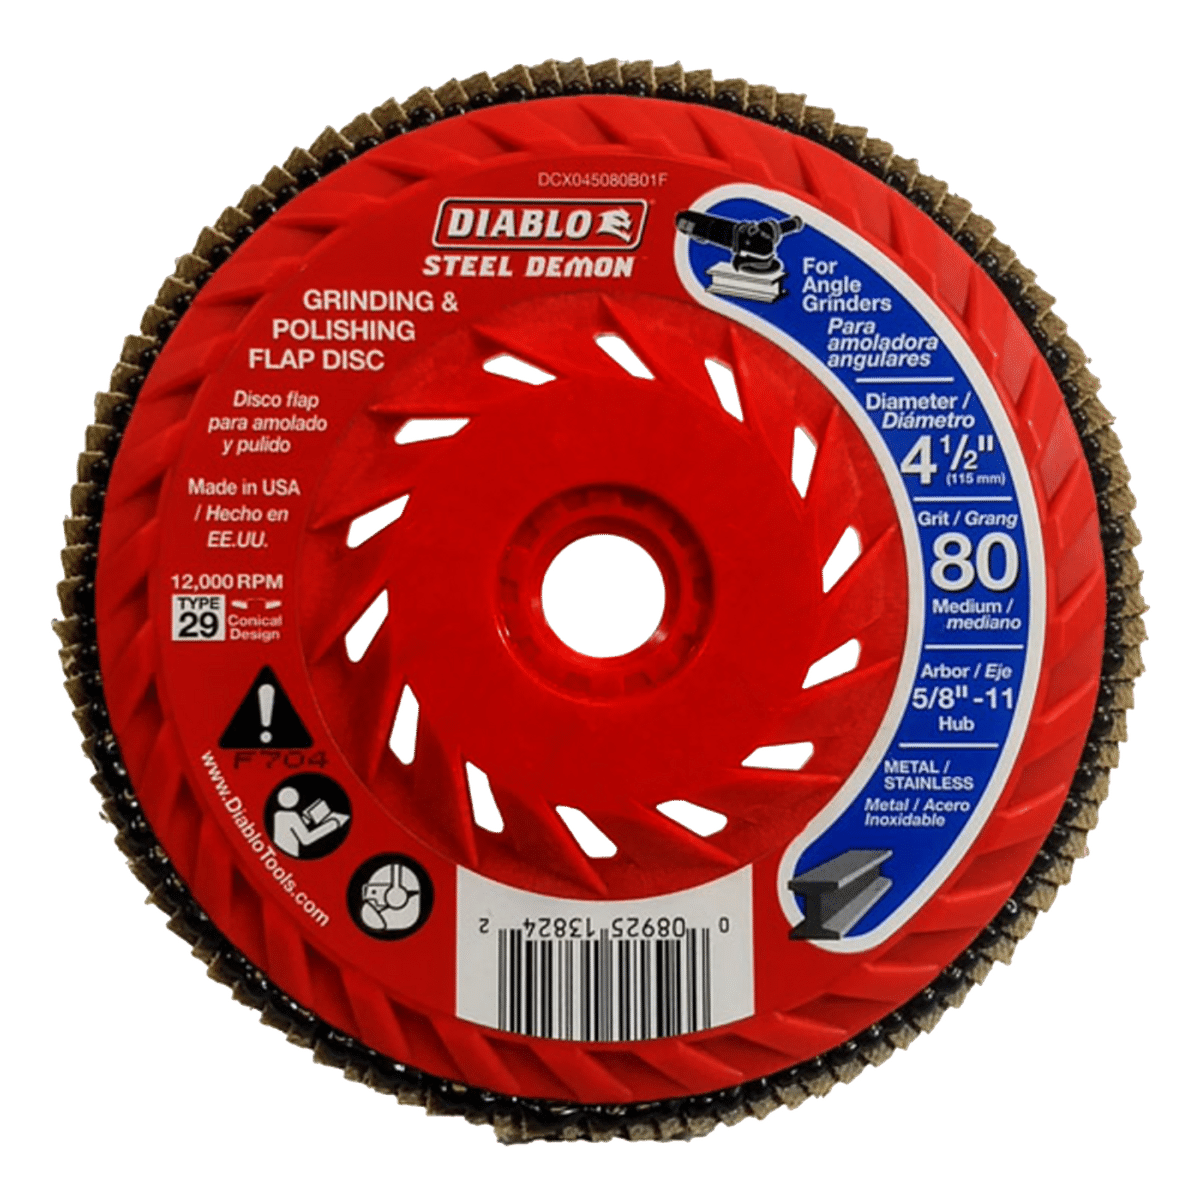 DCX045080B01F | Cutting & Grinding | Metal Grinding | Flap Disc